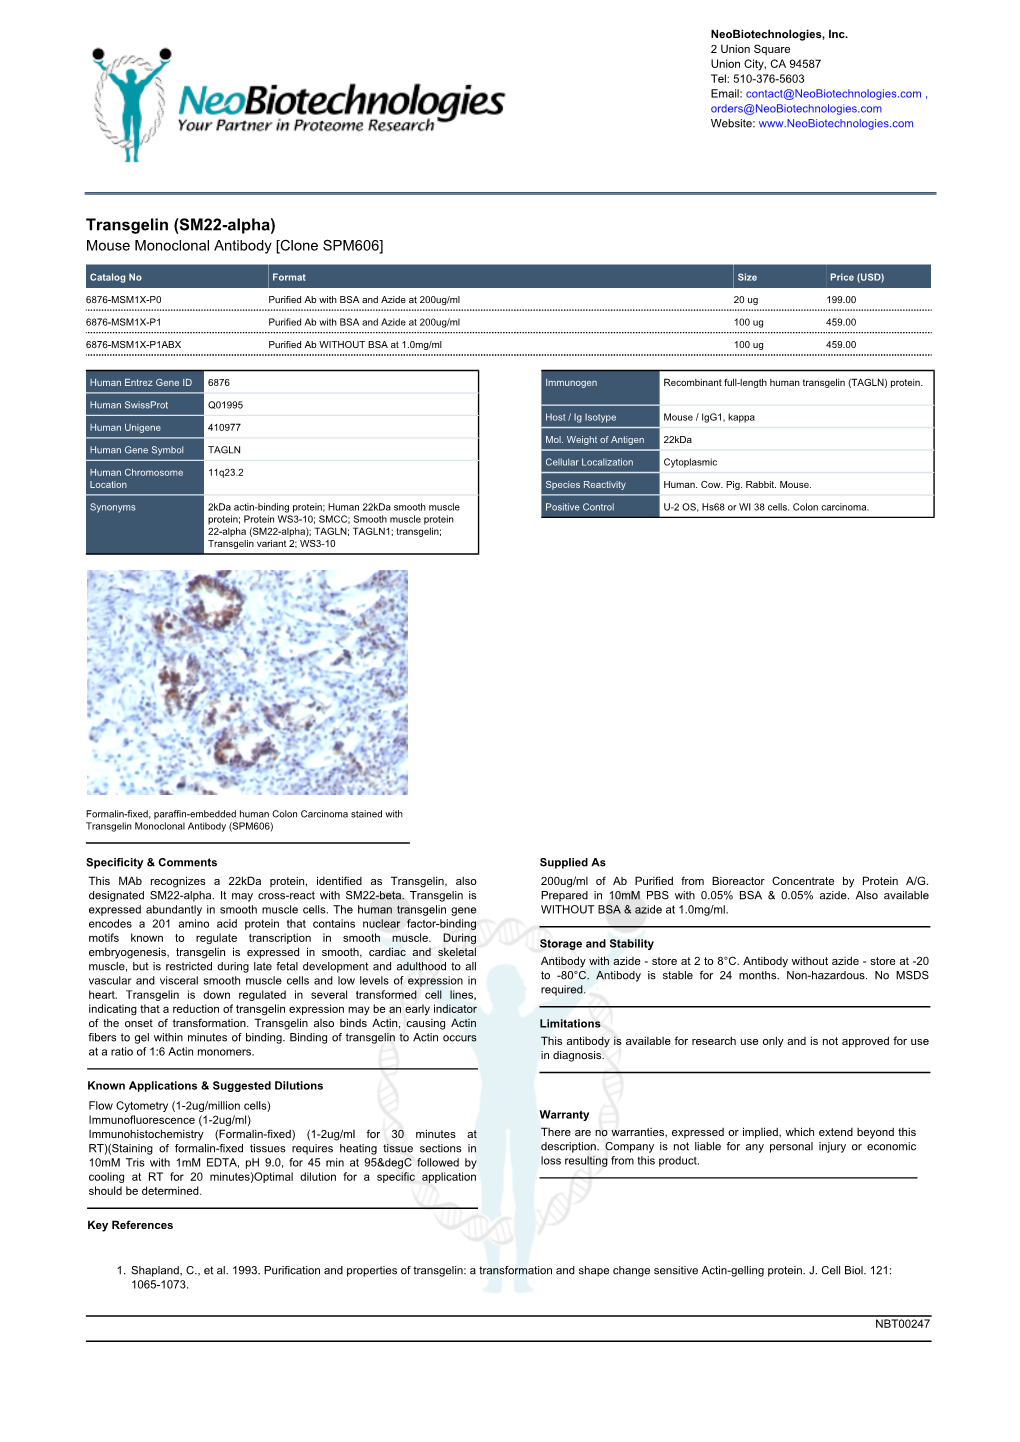 Transgelin (SM22-Alpha) Mouse Monoclonal Antibody [Clone SPM606]